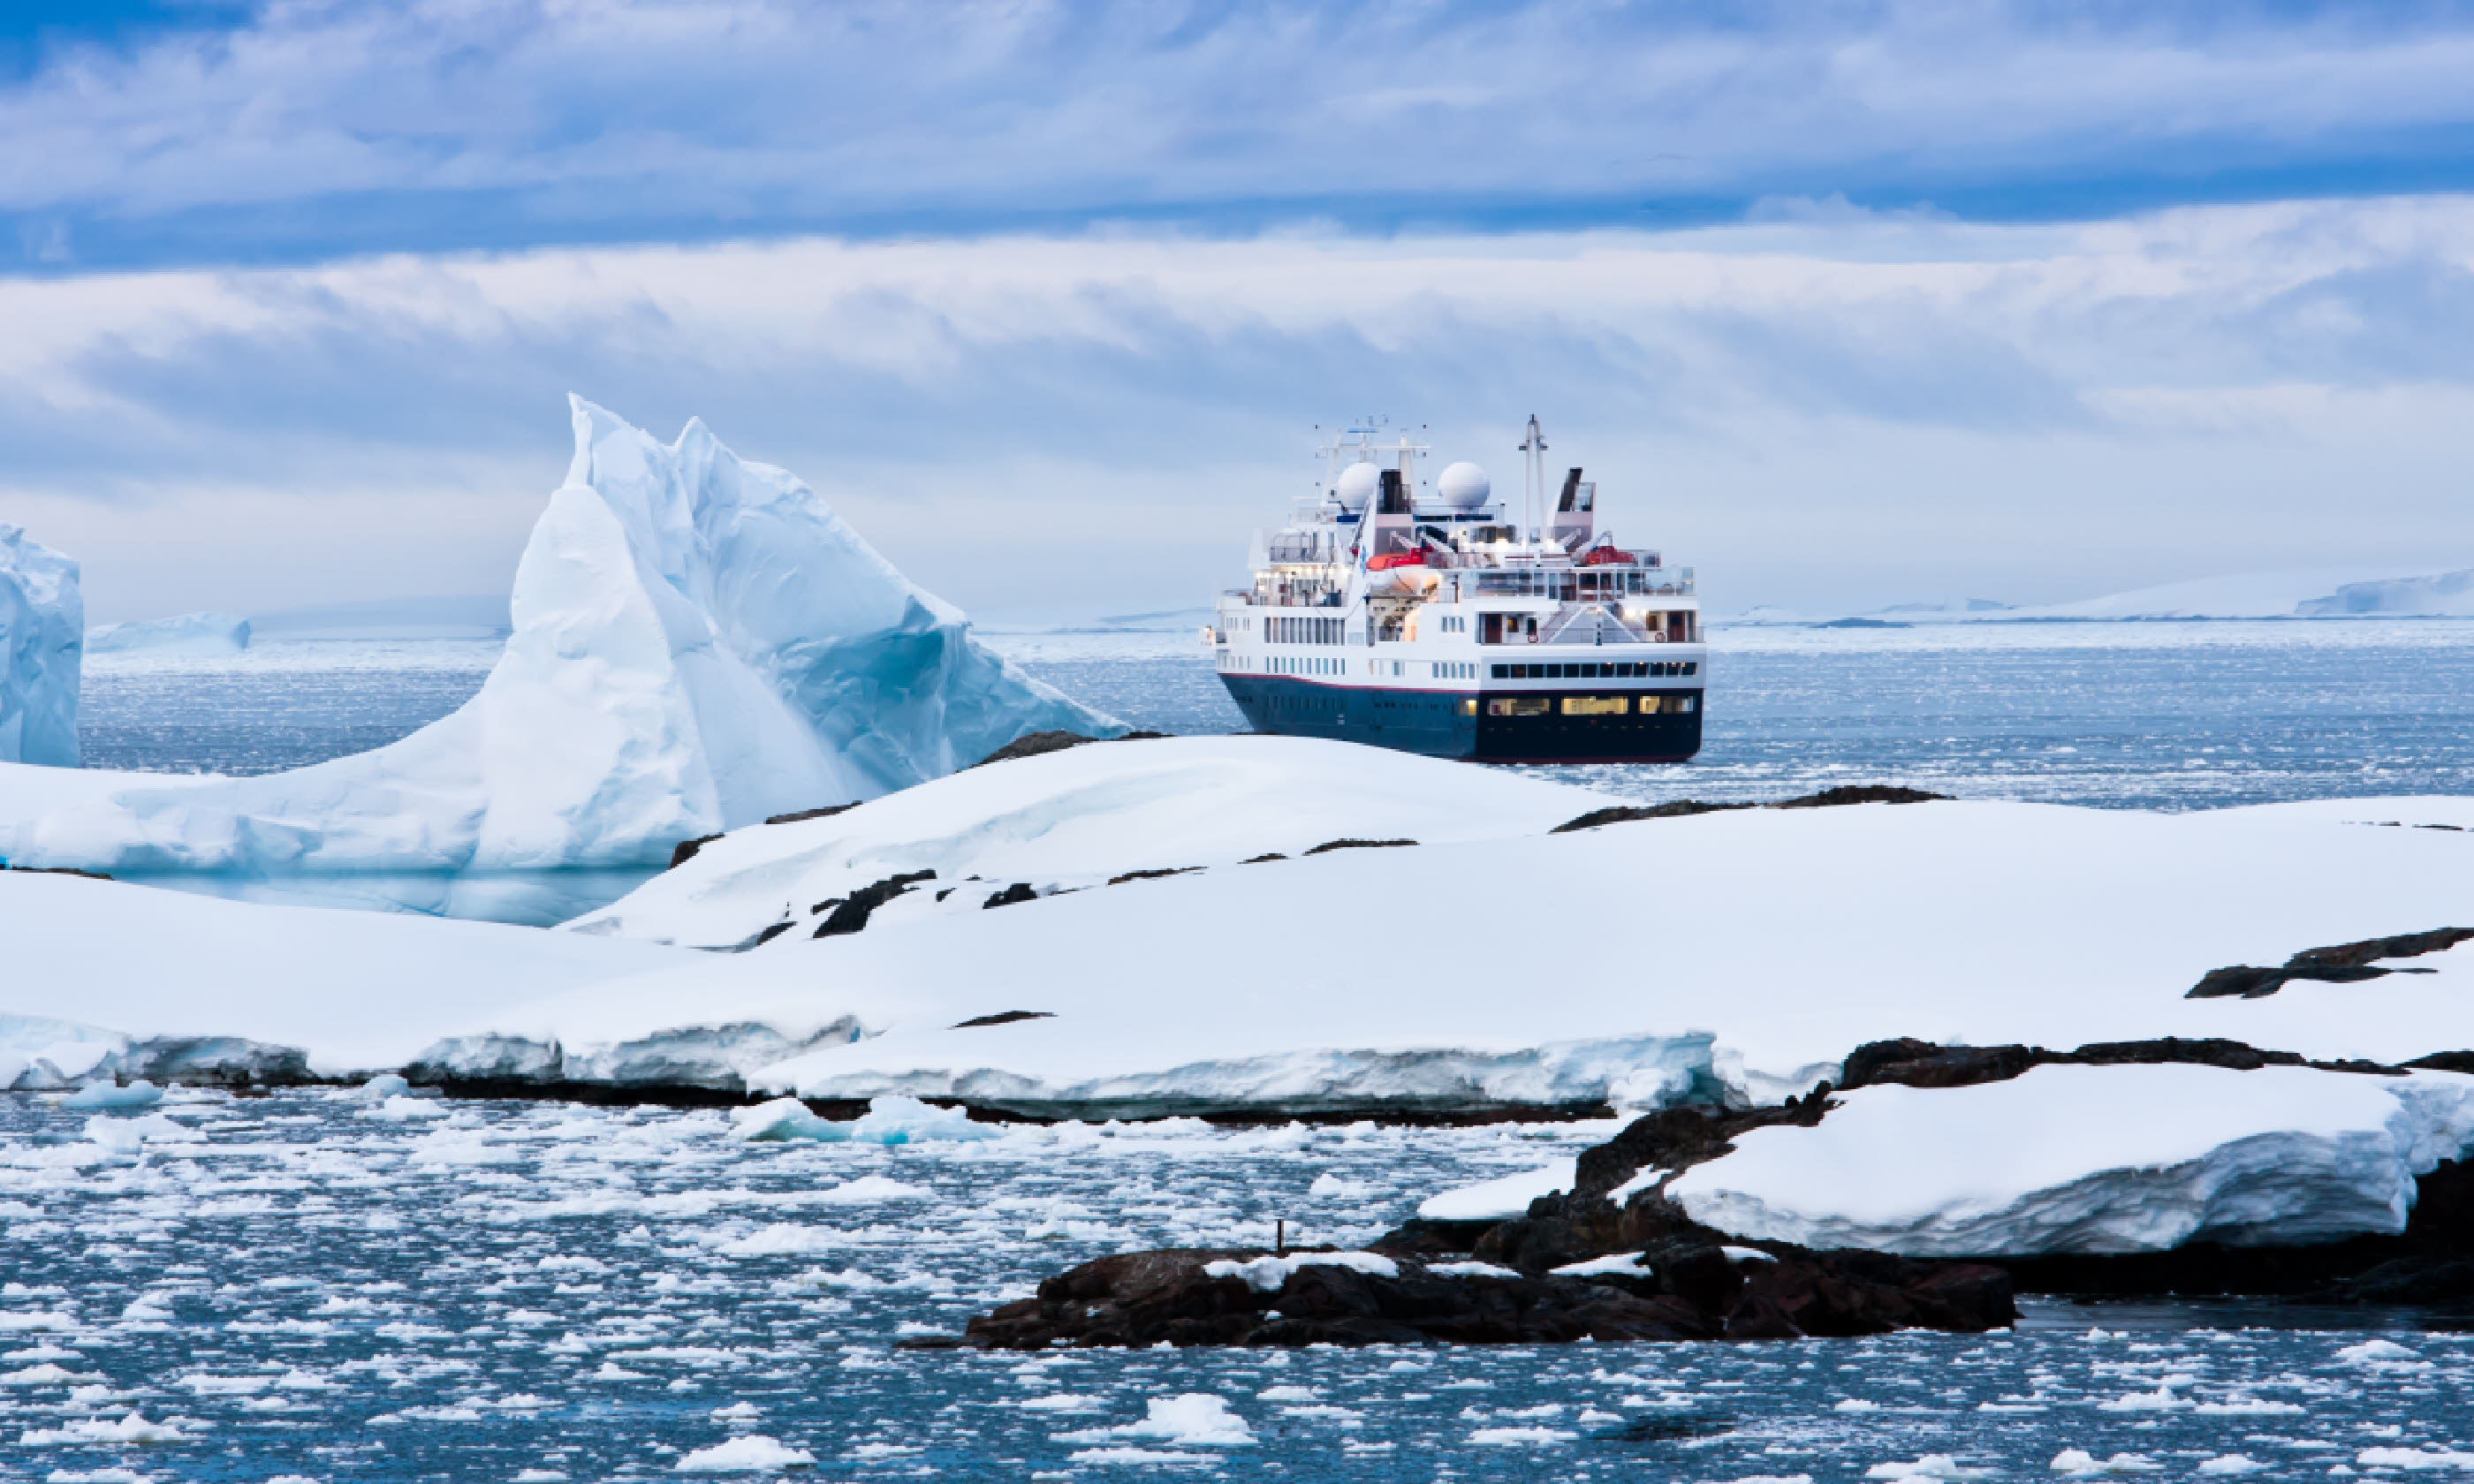 Big cruise ship in Antarctic waters (Shutterstock)